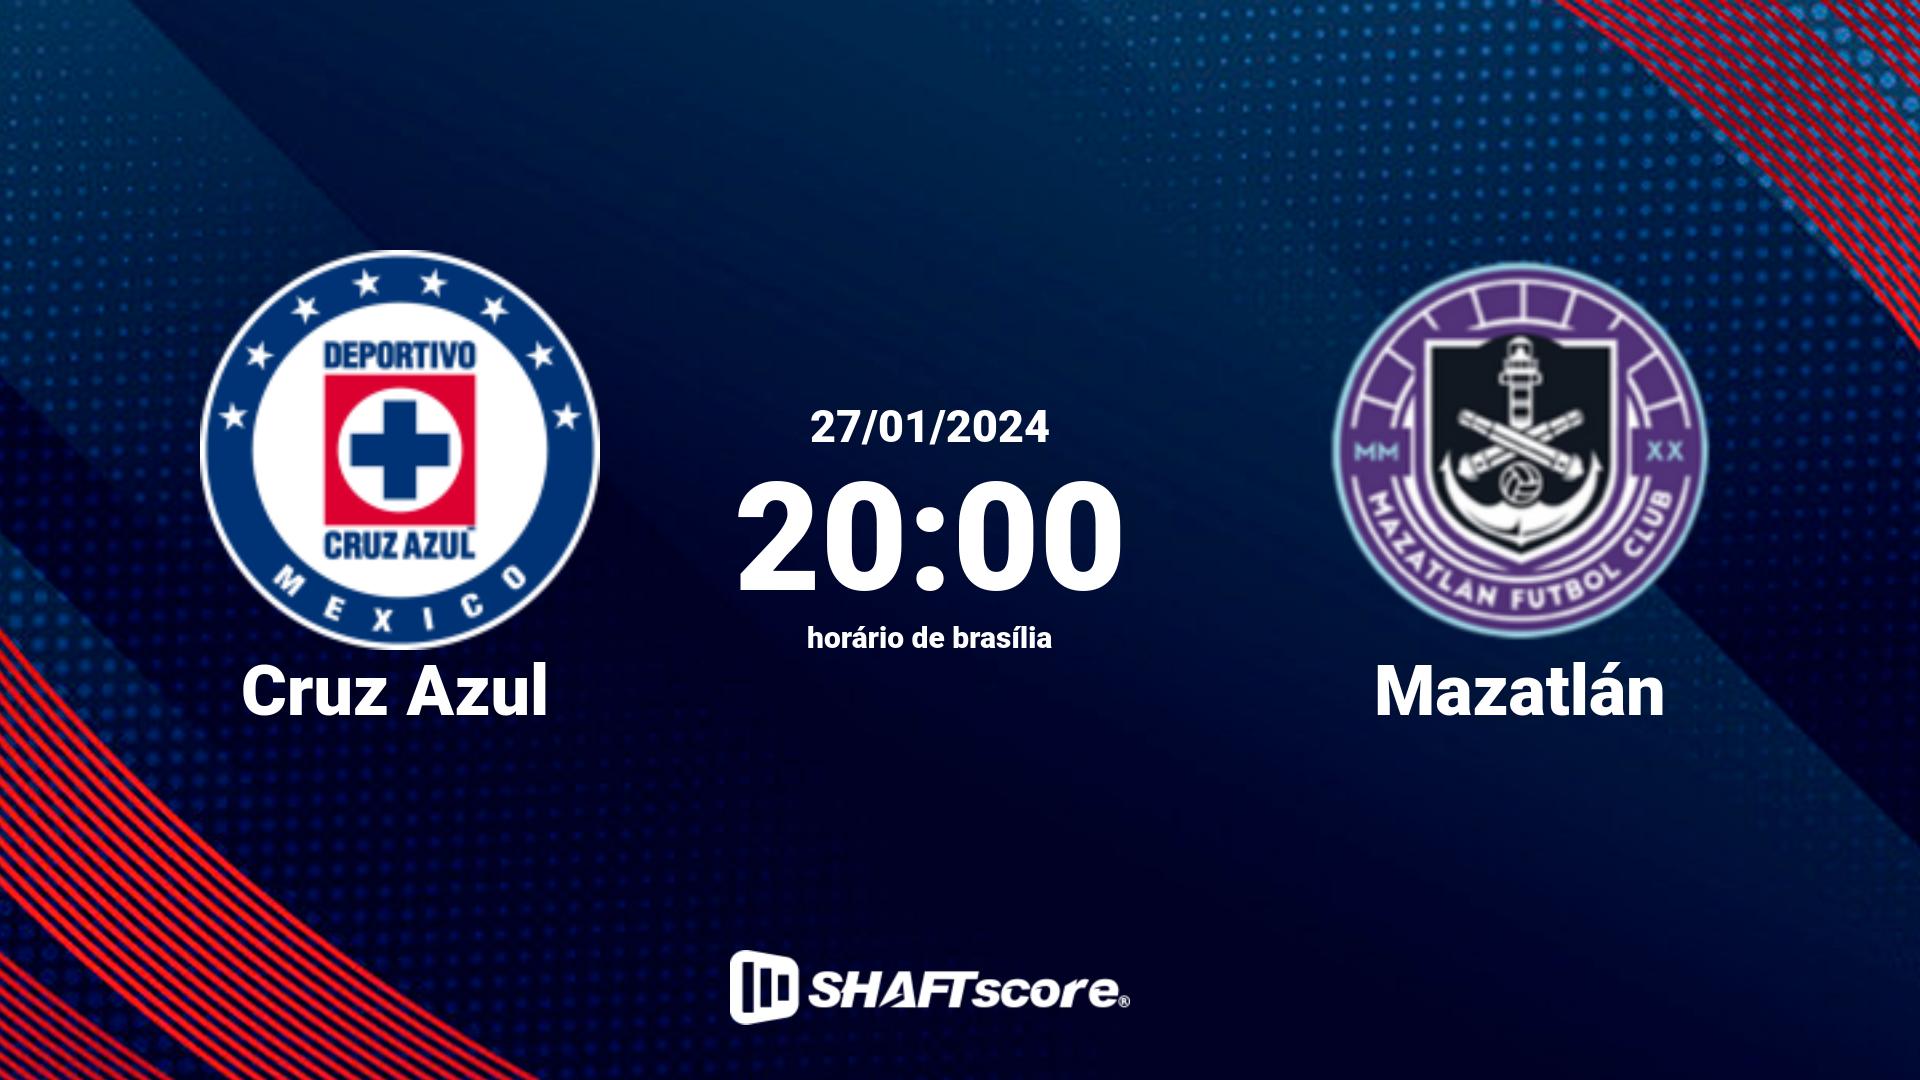 Estatísticas do jogo Cruz Azul vs Mazatlán 27.01 20:00